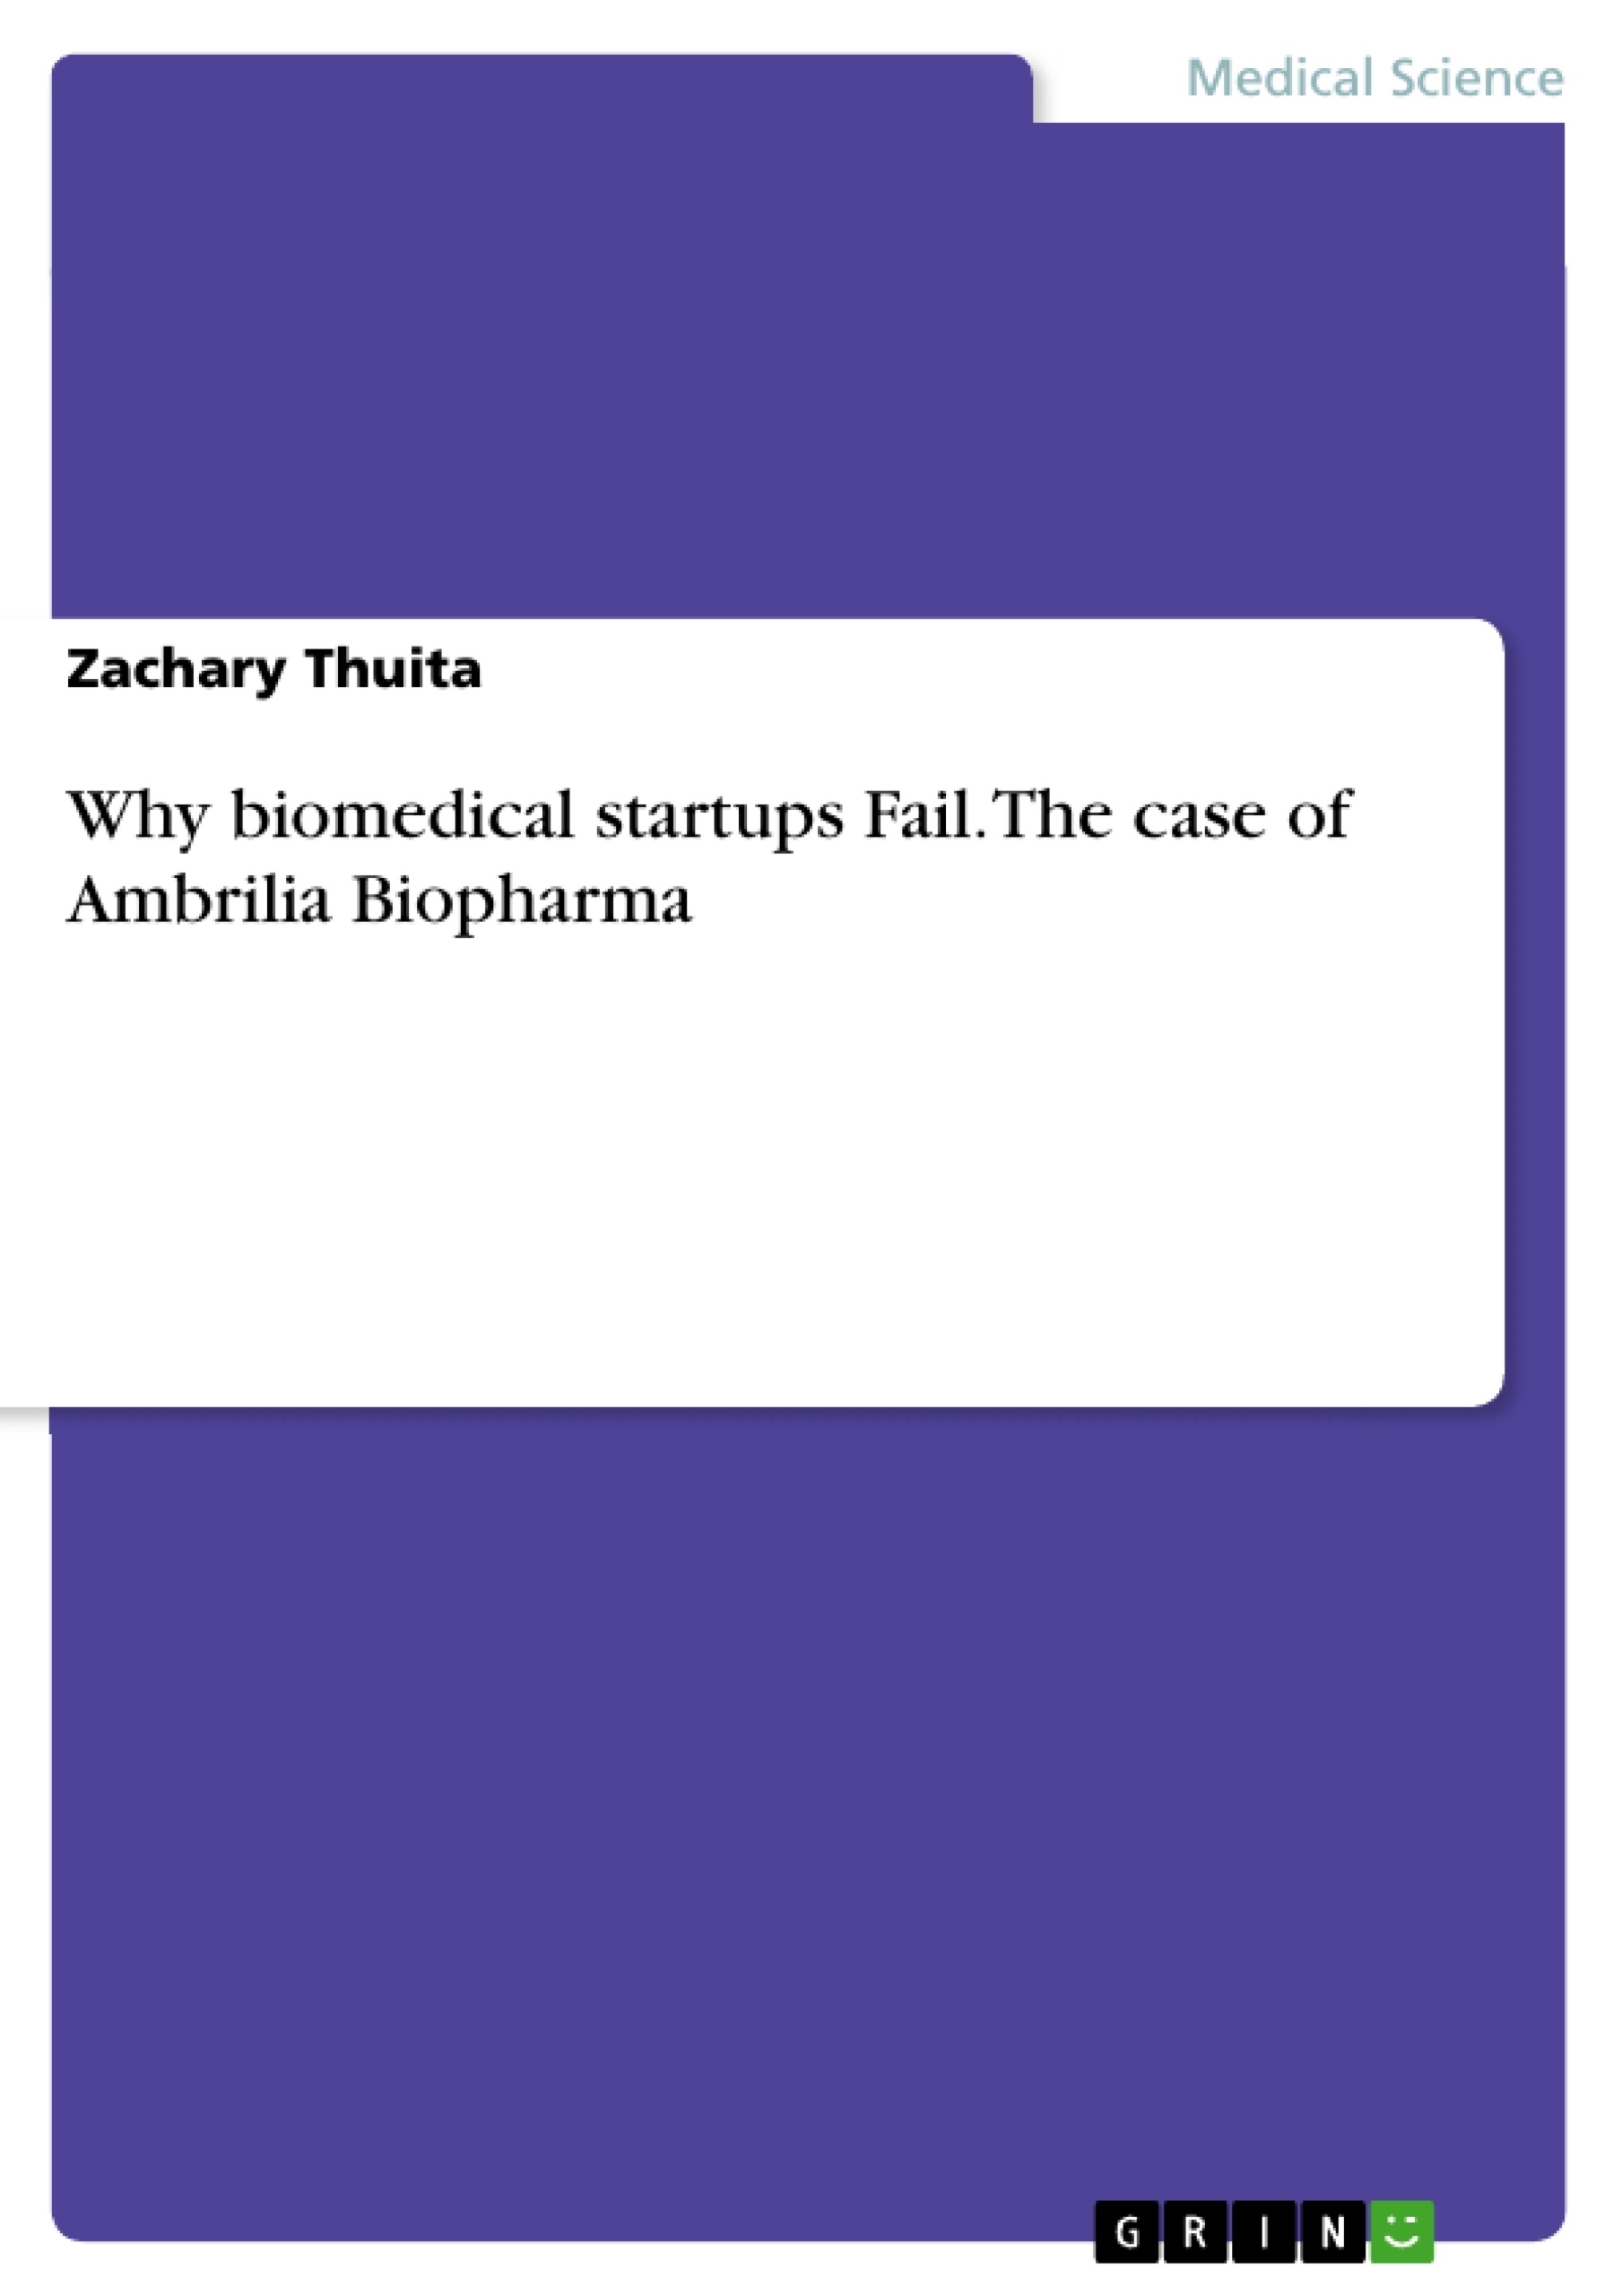 Titre: Why biomedical startups Fail. The case of Ambrilia Biopharma